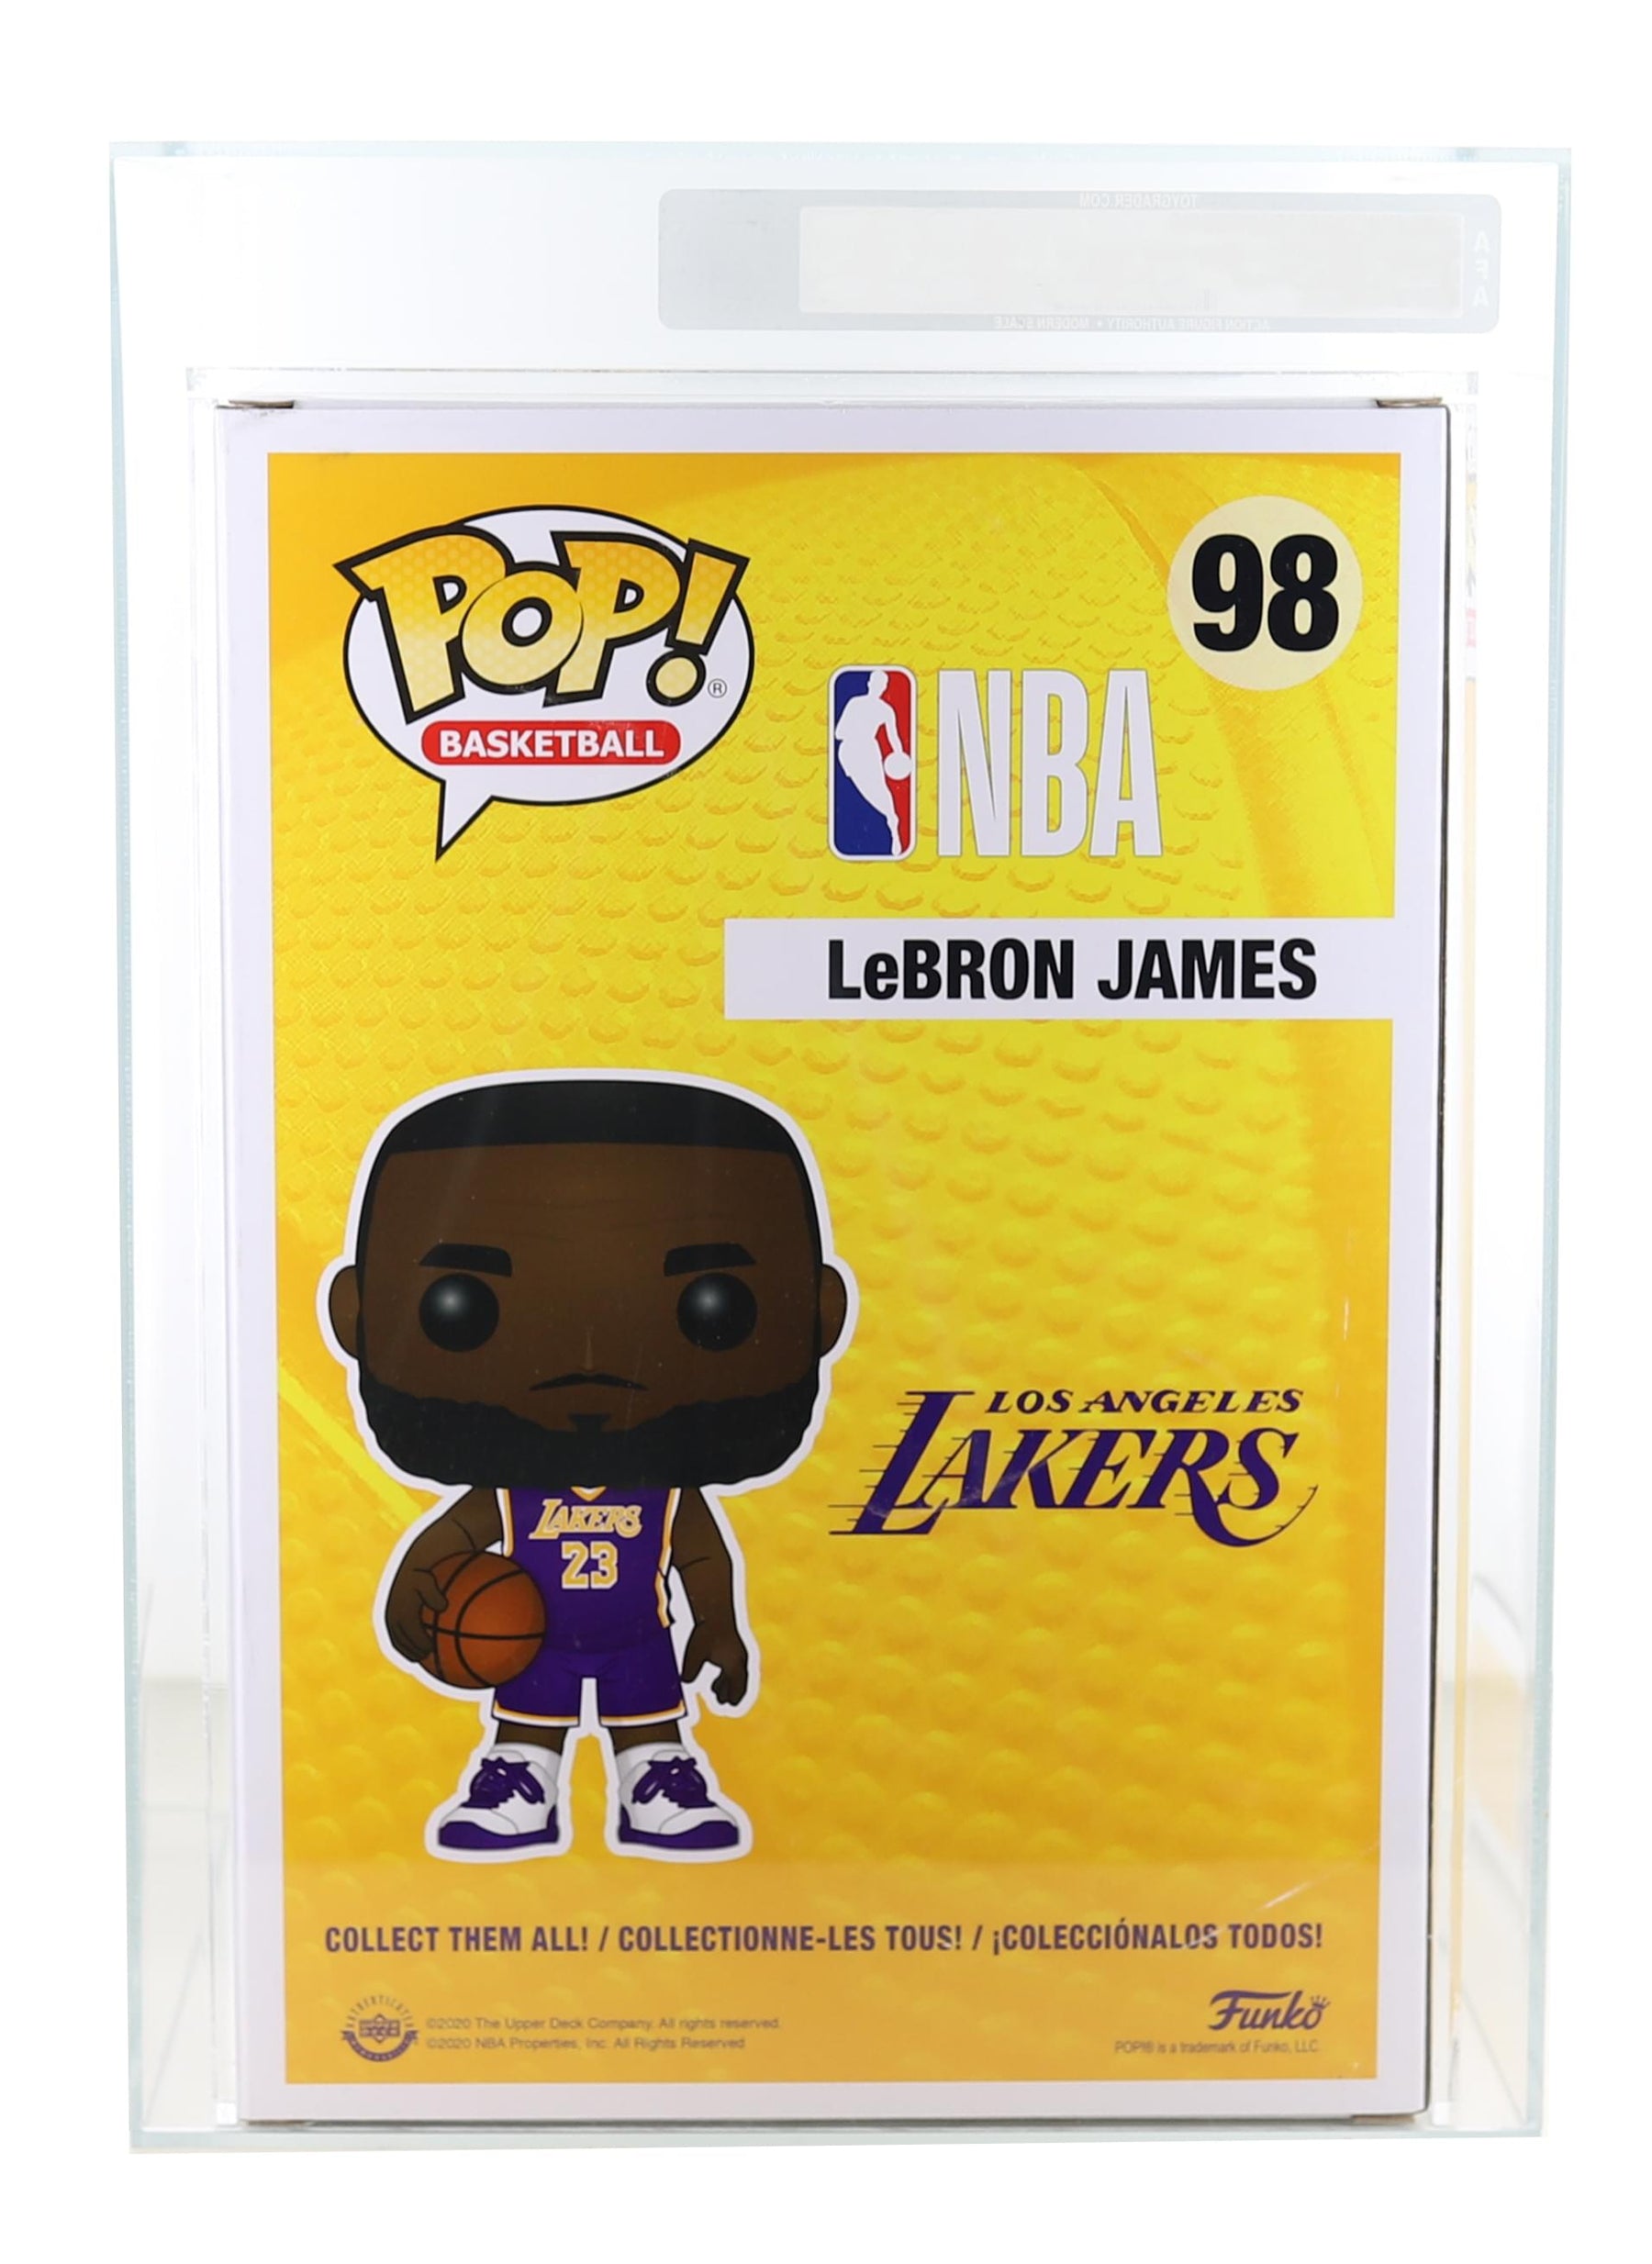 Funko POP! NBA: Lakers - 10 LeBron James (Purple Jersey